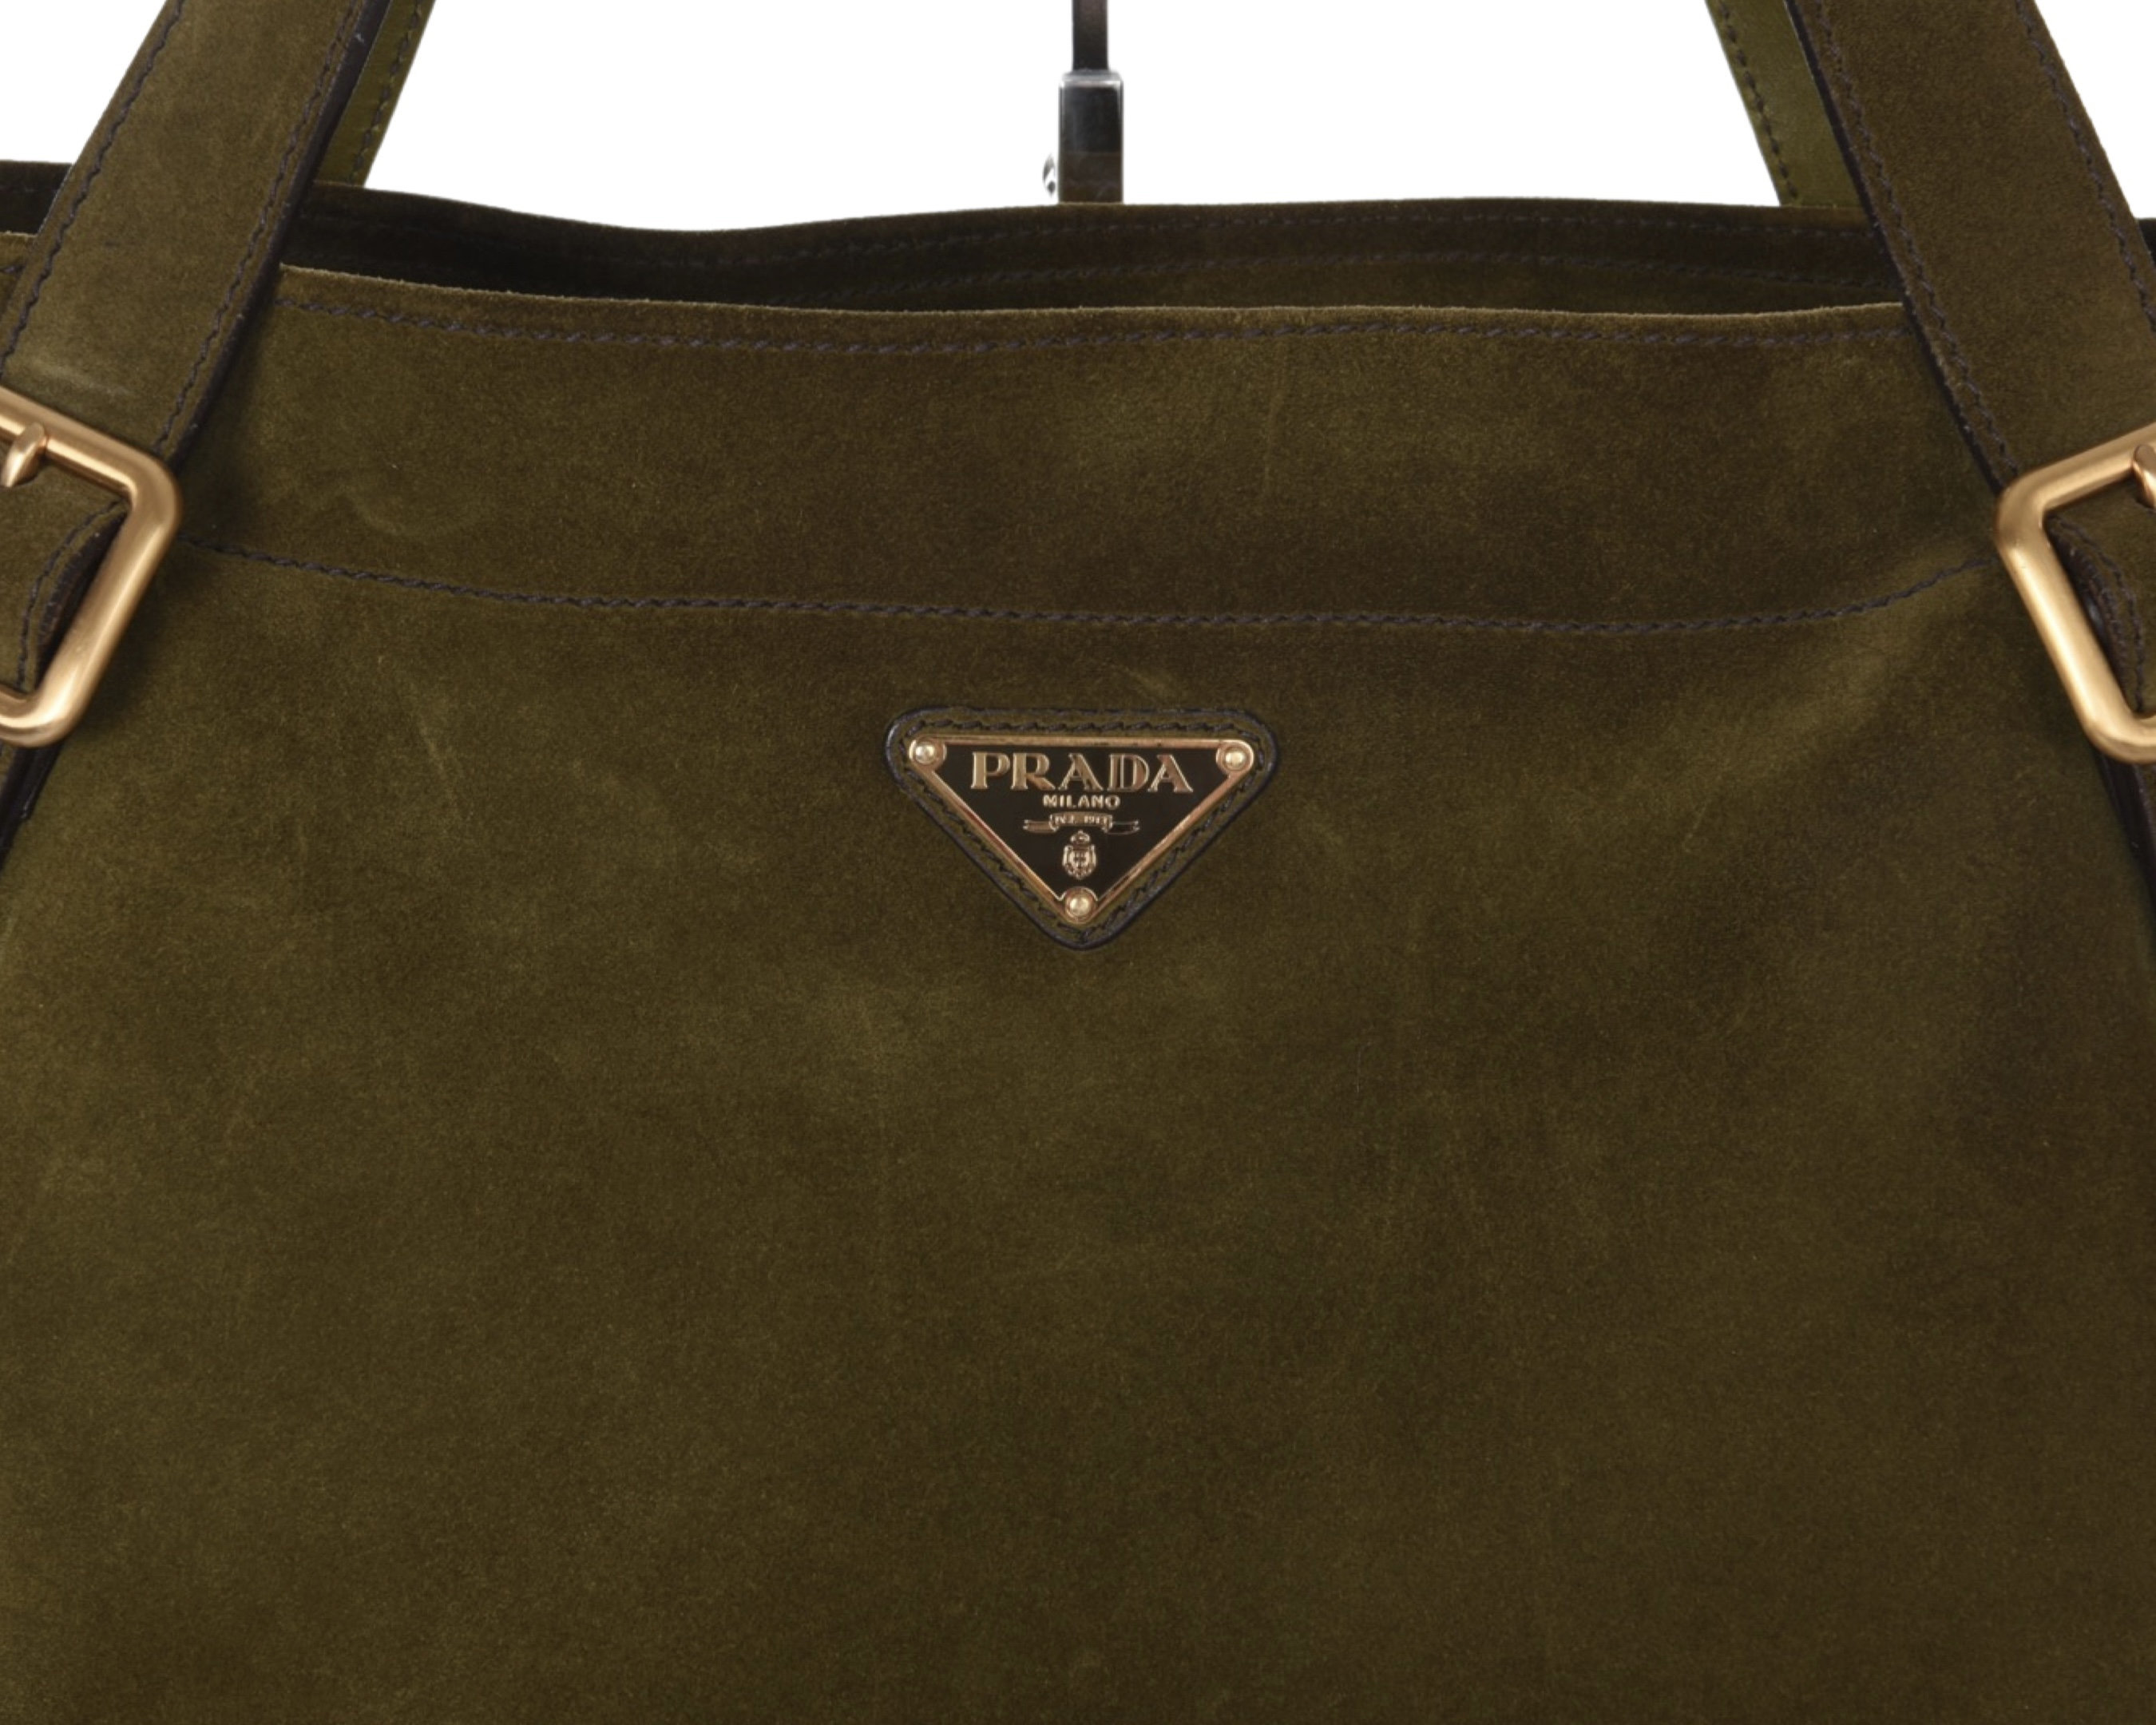 Prada vintage green suede and brown leather shoulder bag for women